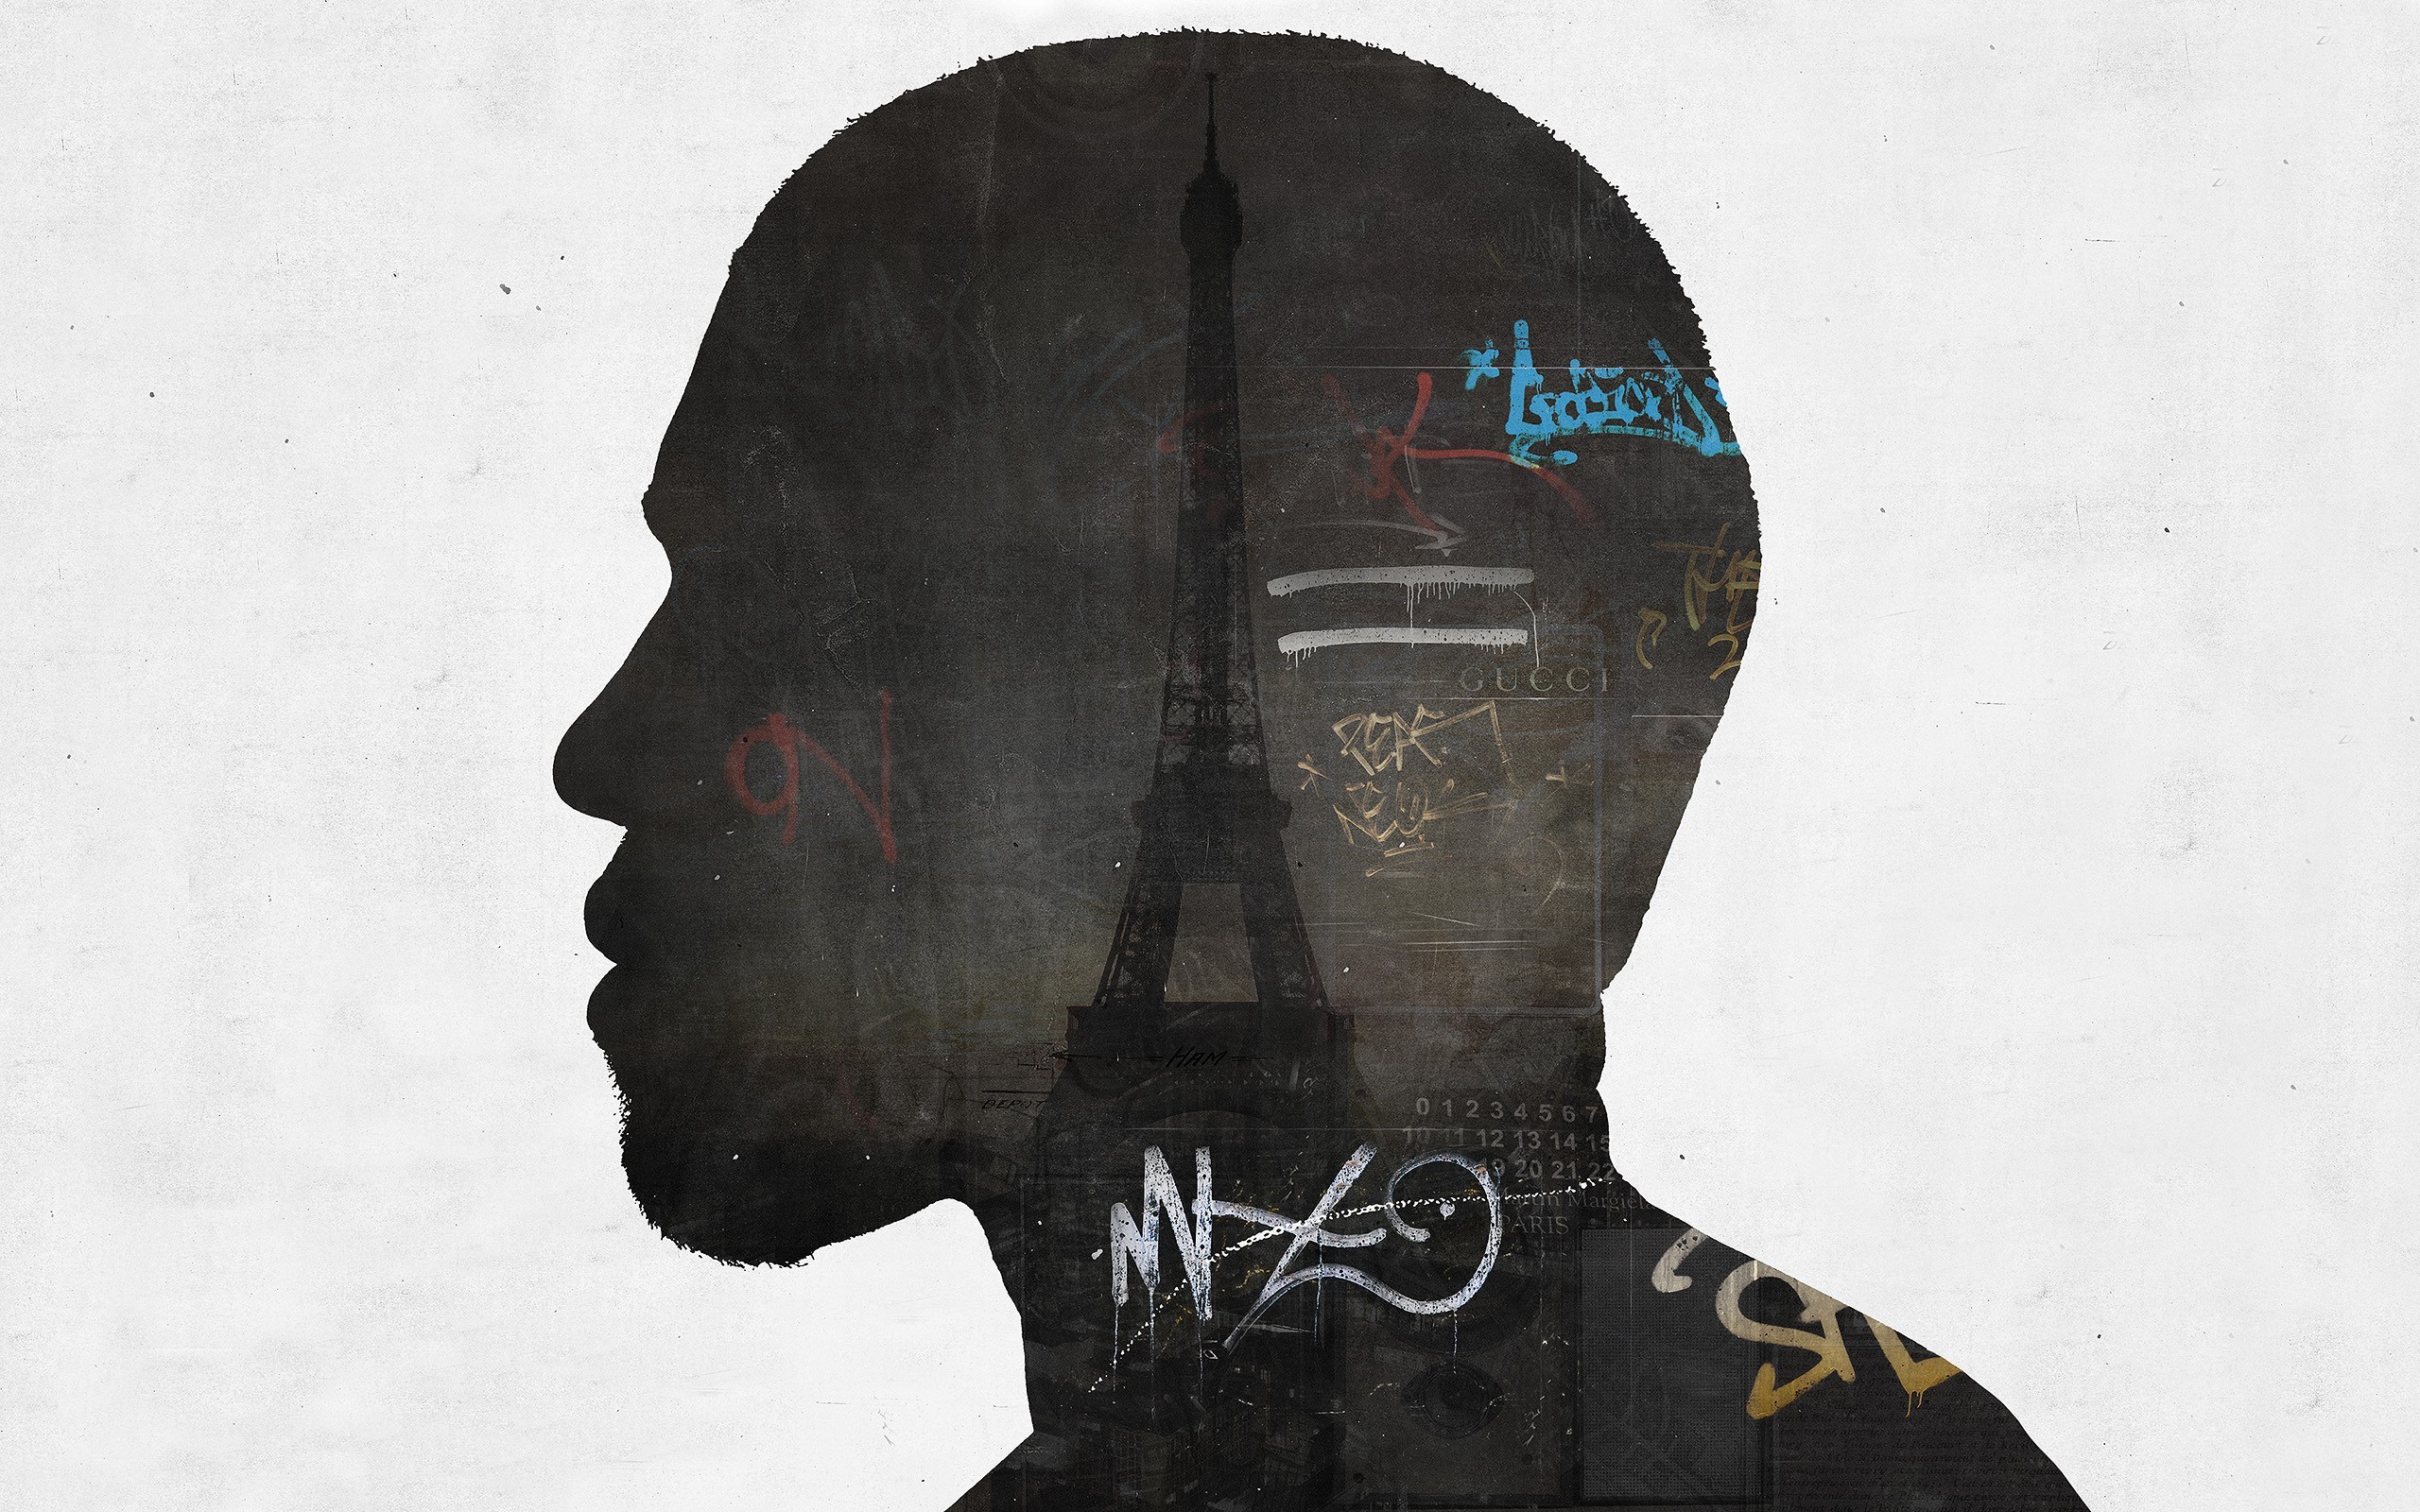 General 2560x1600 Alex Cherry Kanye West graffiti Eiffel Tower profile artwork face silhouette simple background Paris men white background celebrity Rapper singer